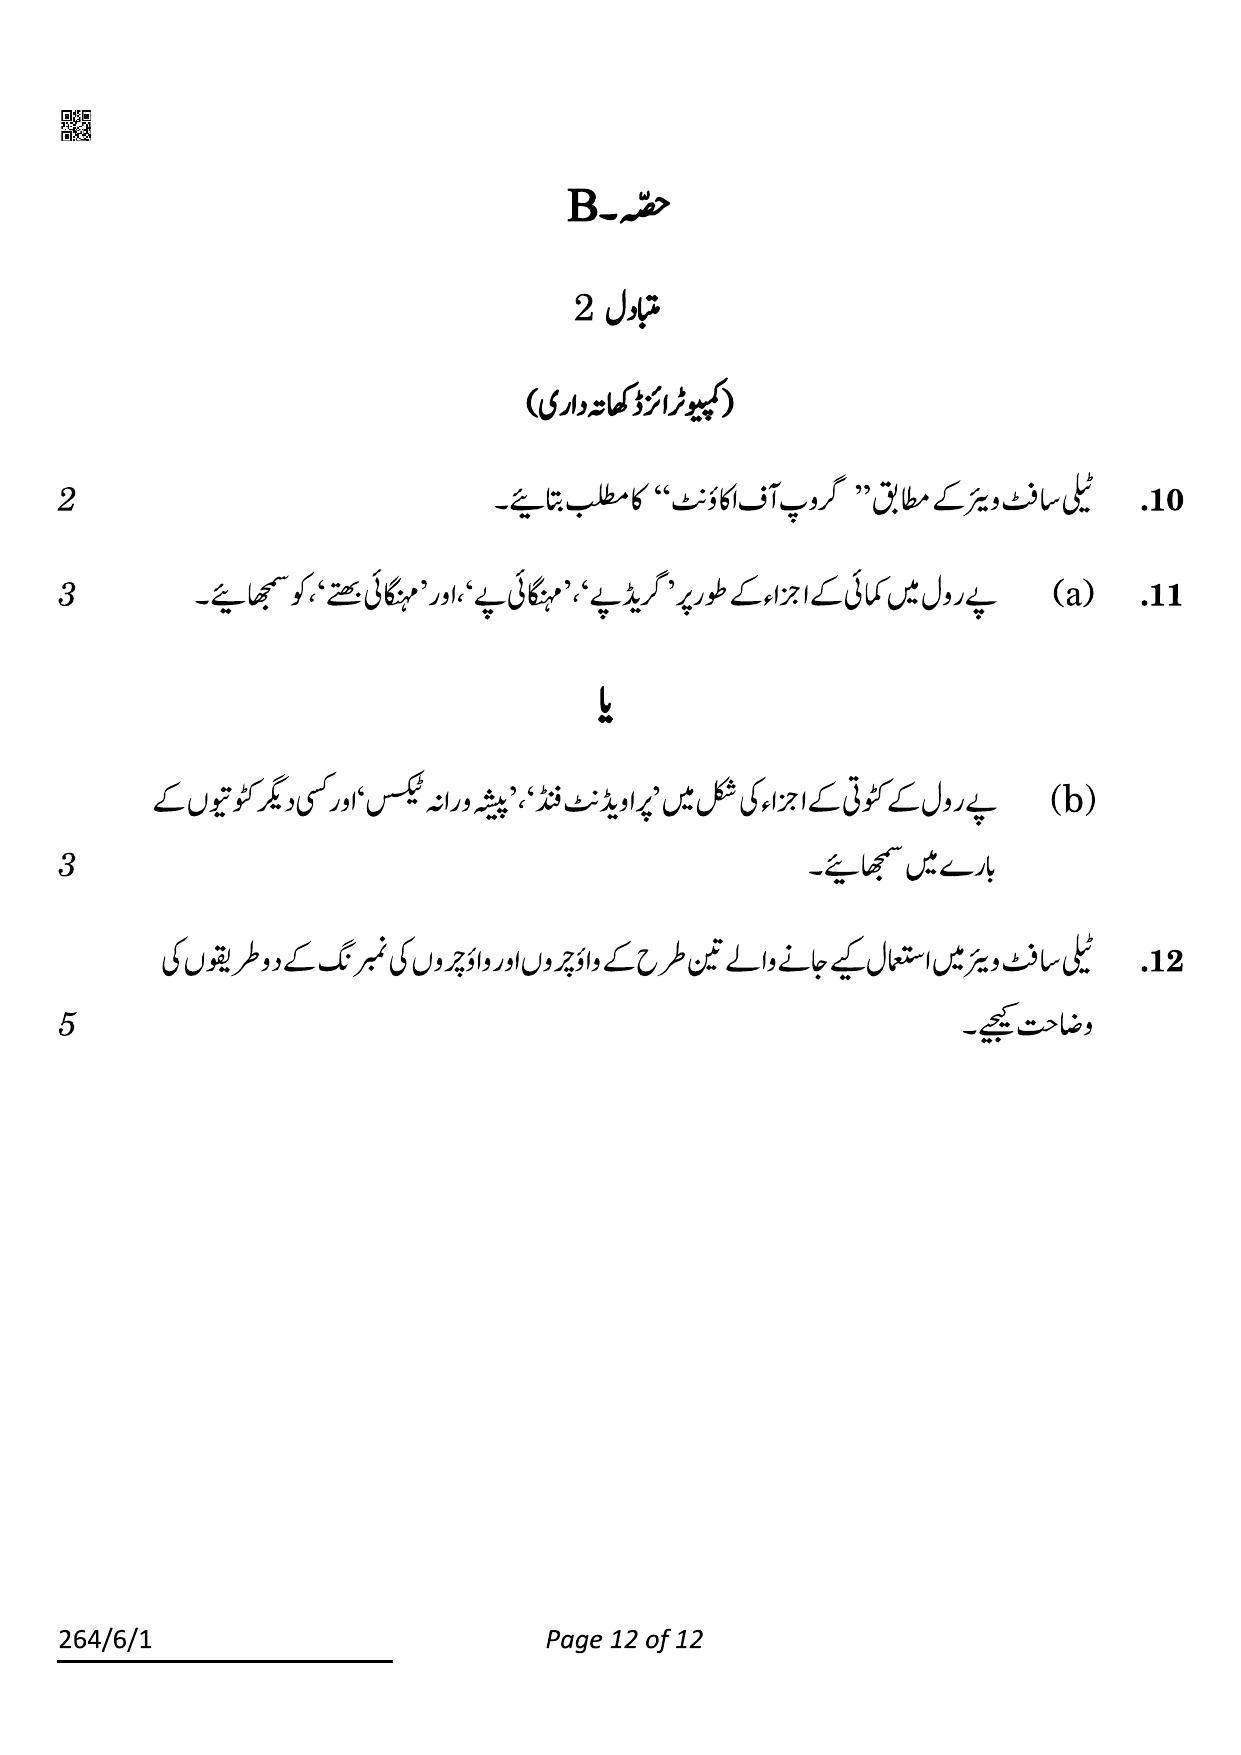 CBSE Class 12 264-6-1 Accountancy Urdu 2022 Compartment Question Paper - Page 12